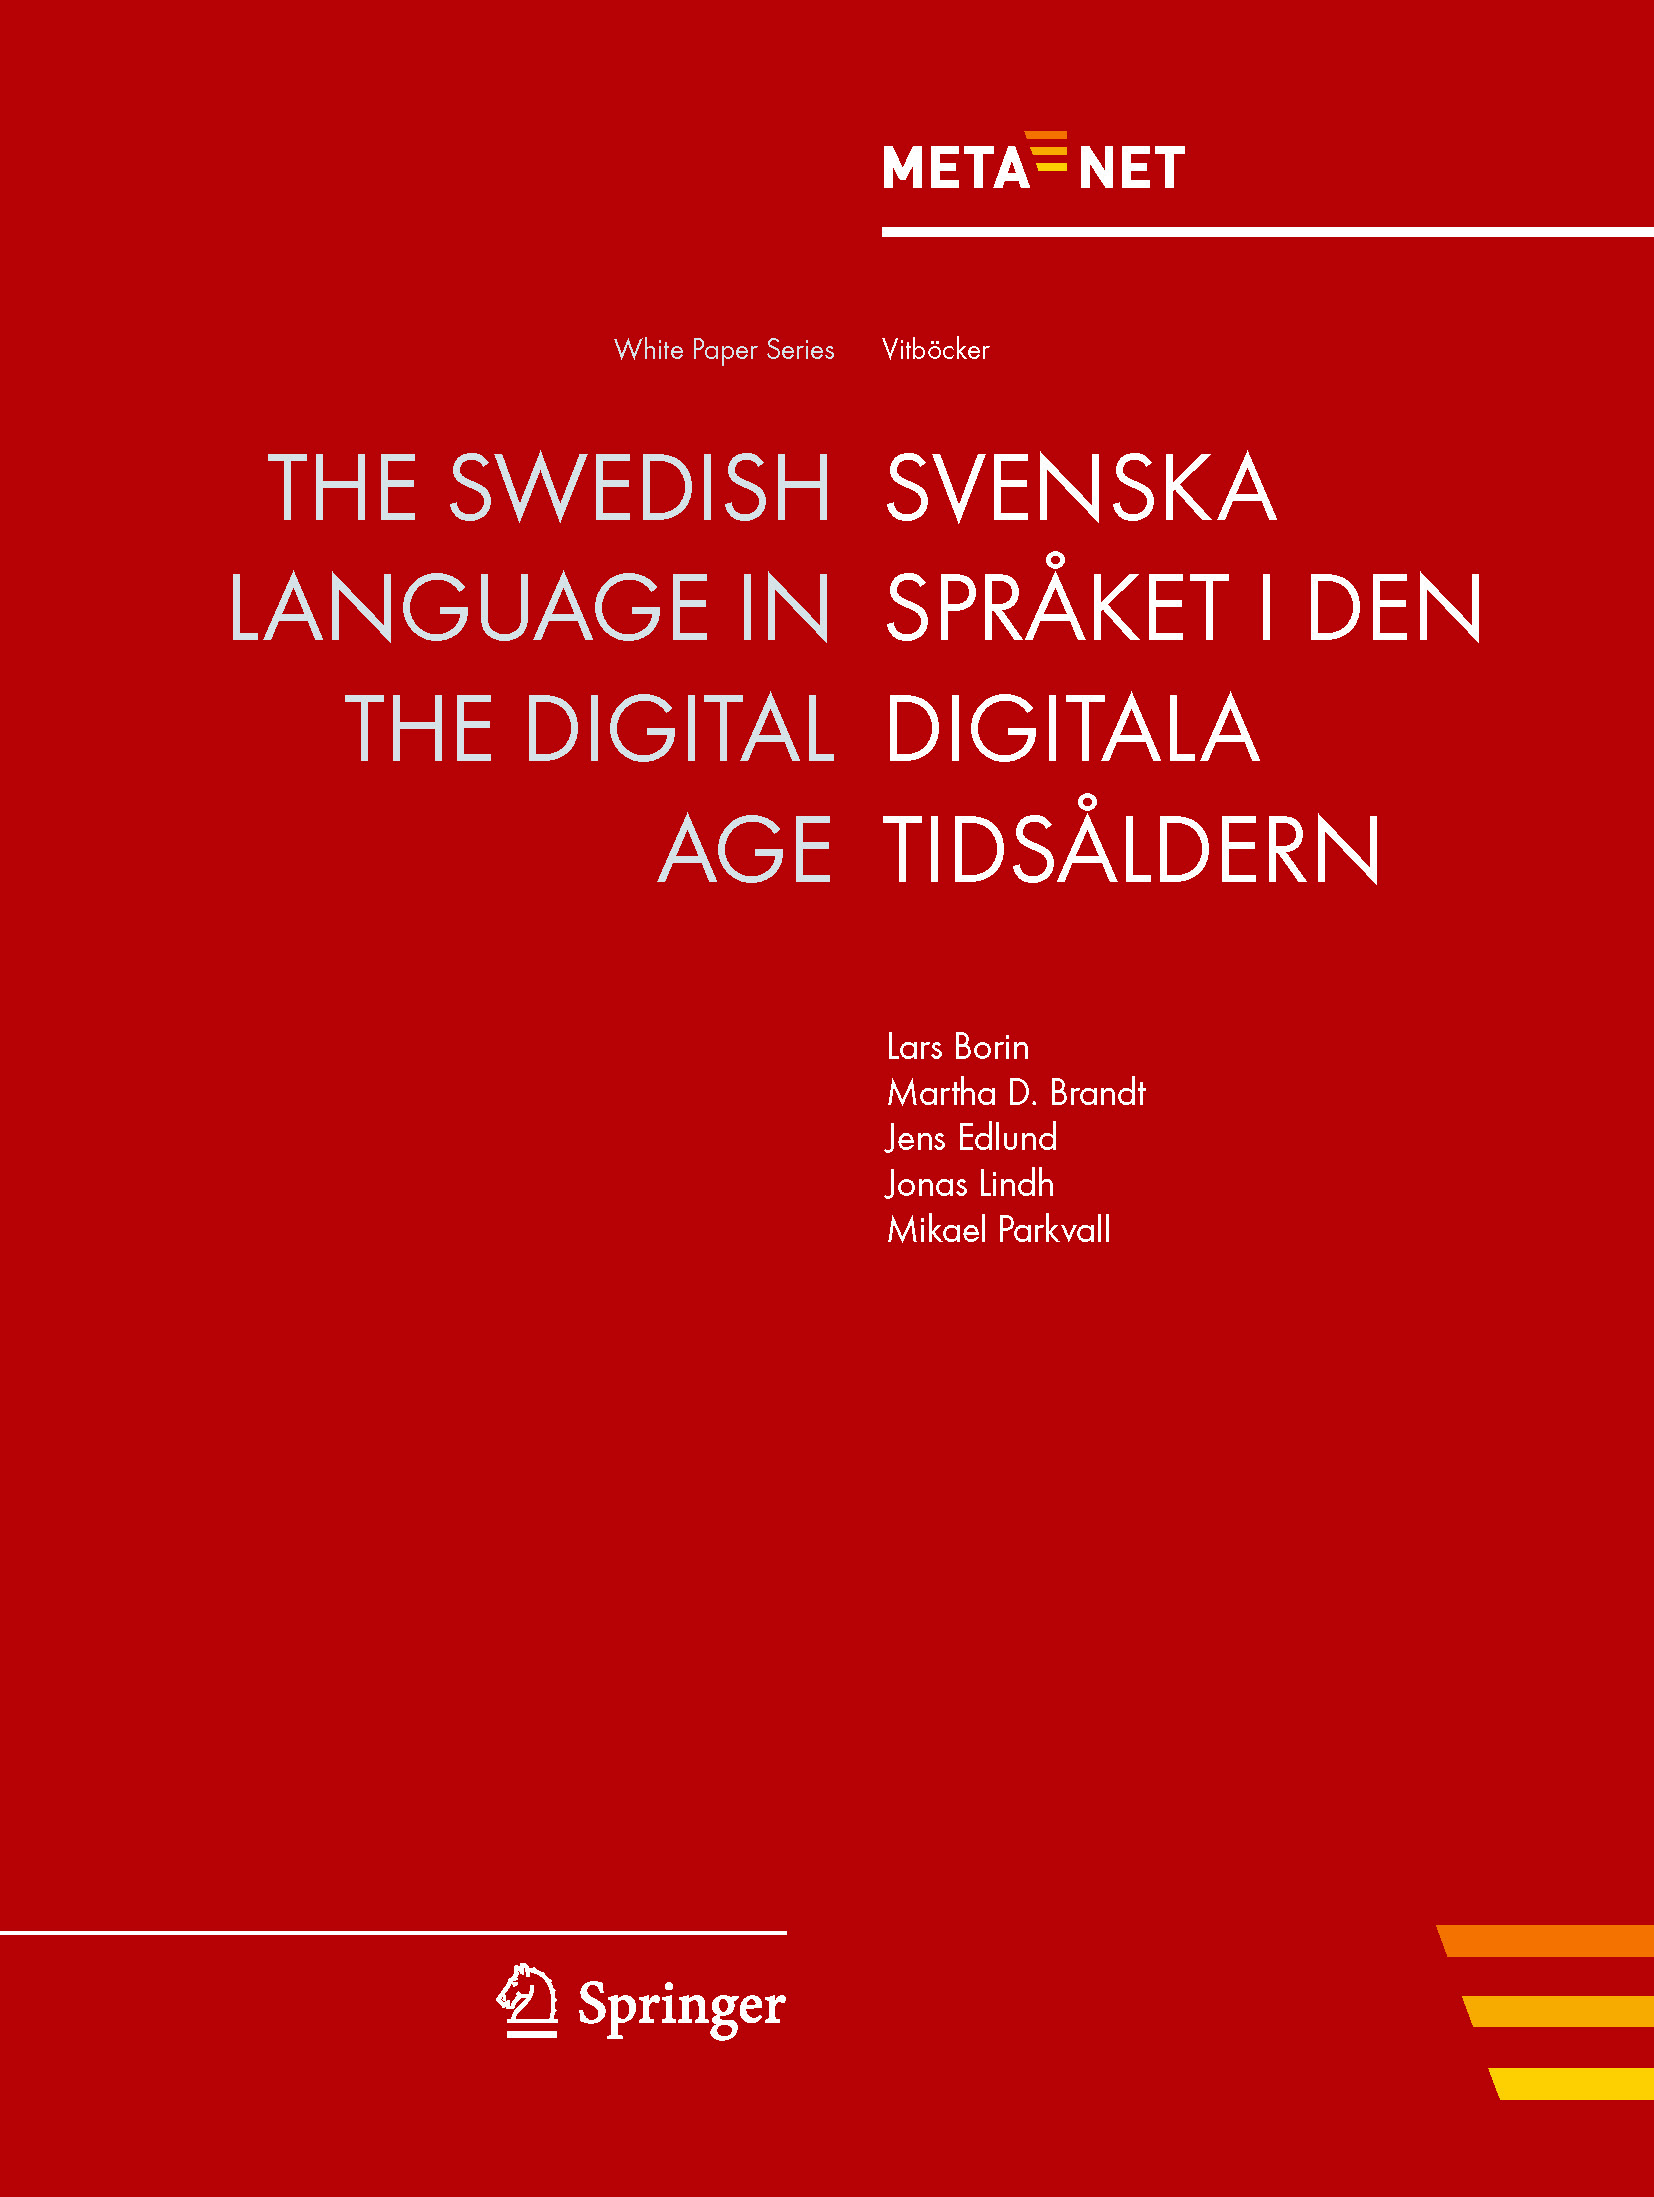 Cover of Swedish Whitepaper